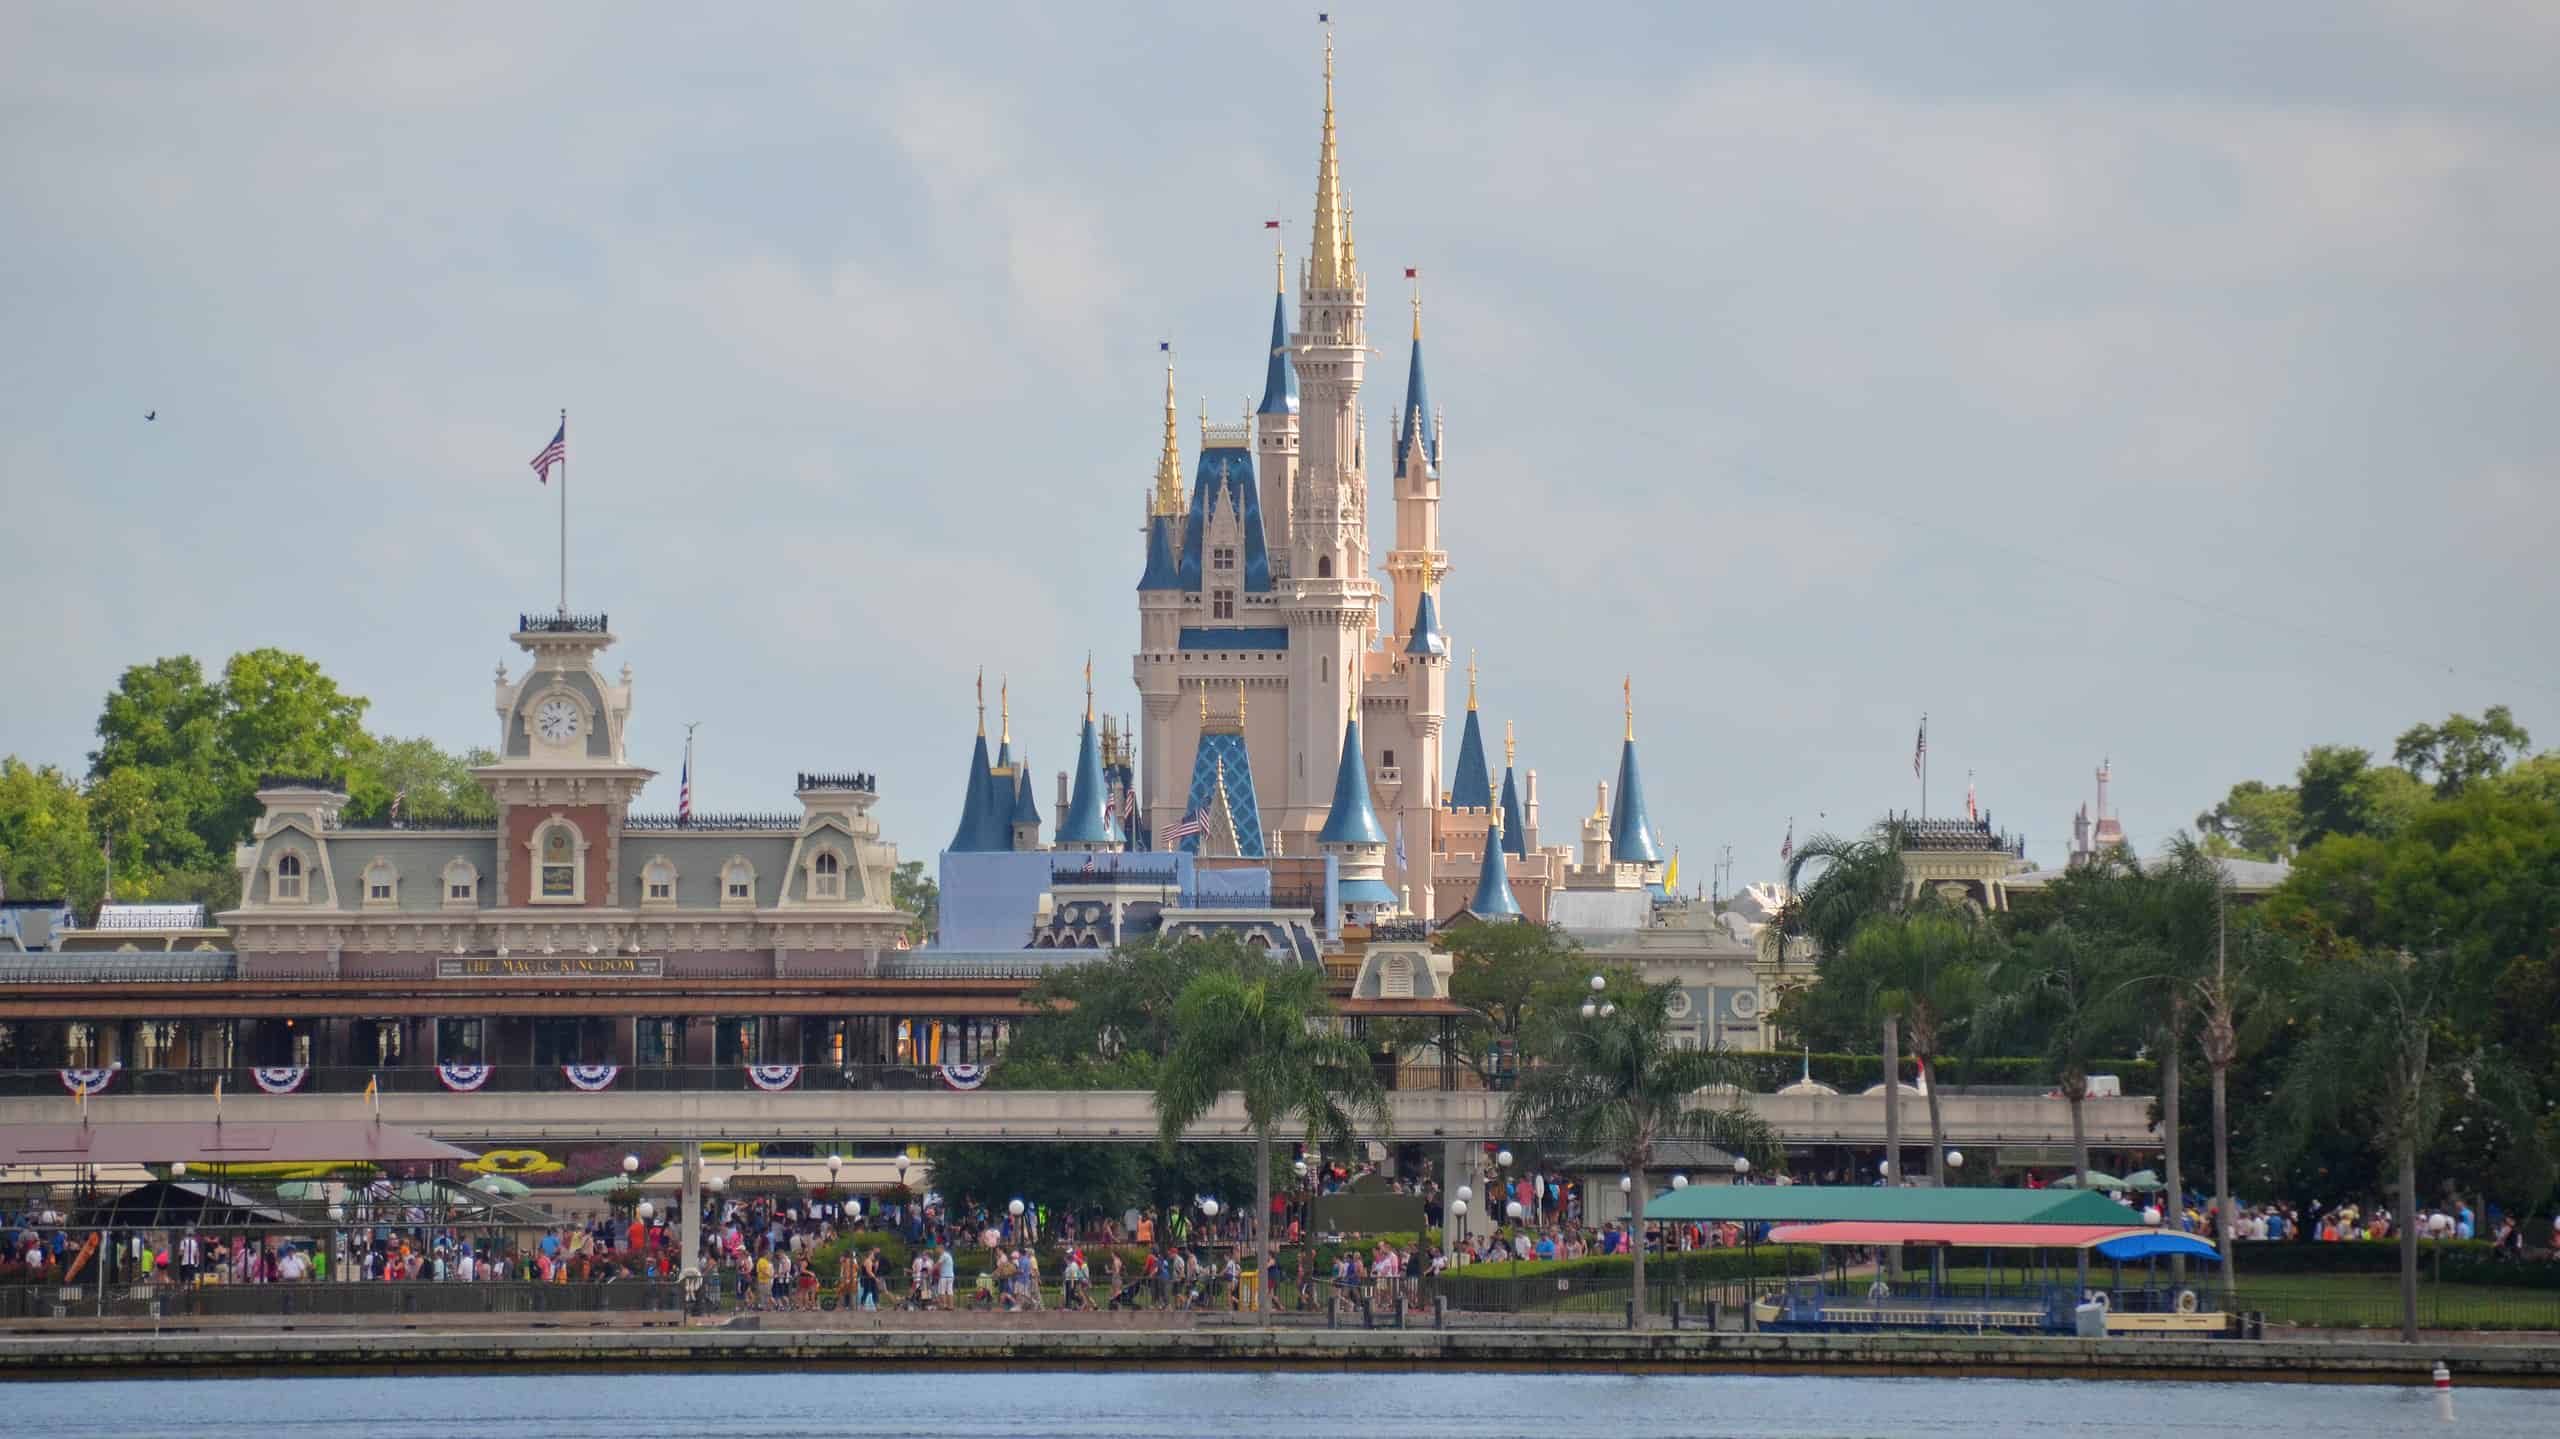 Disney World's Magic Kingdom in Orlando, Florida